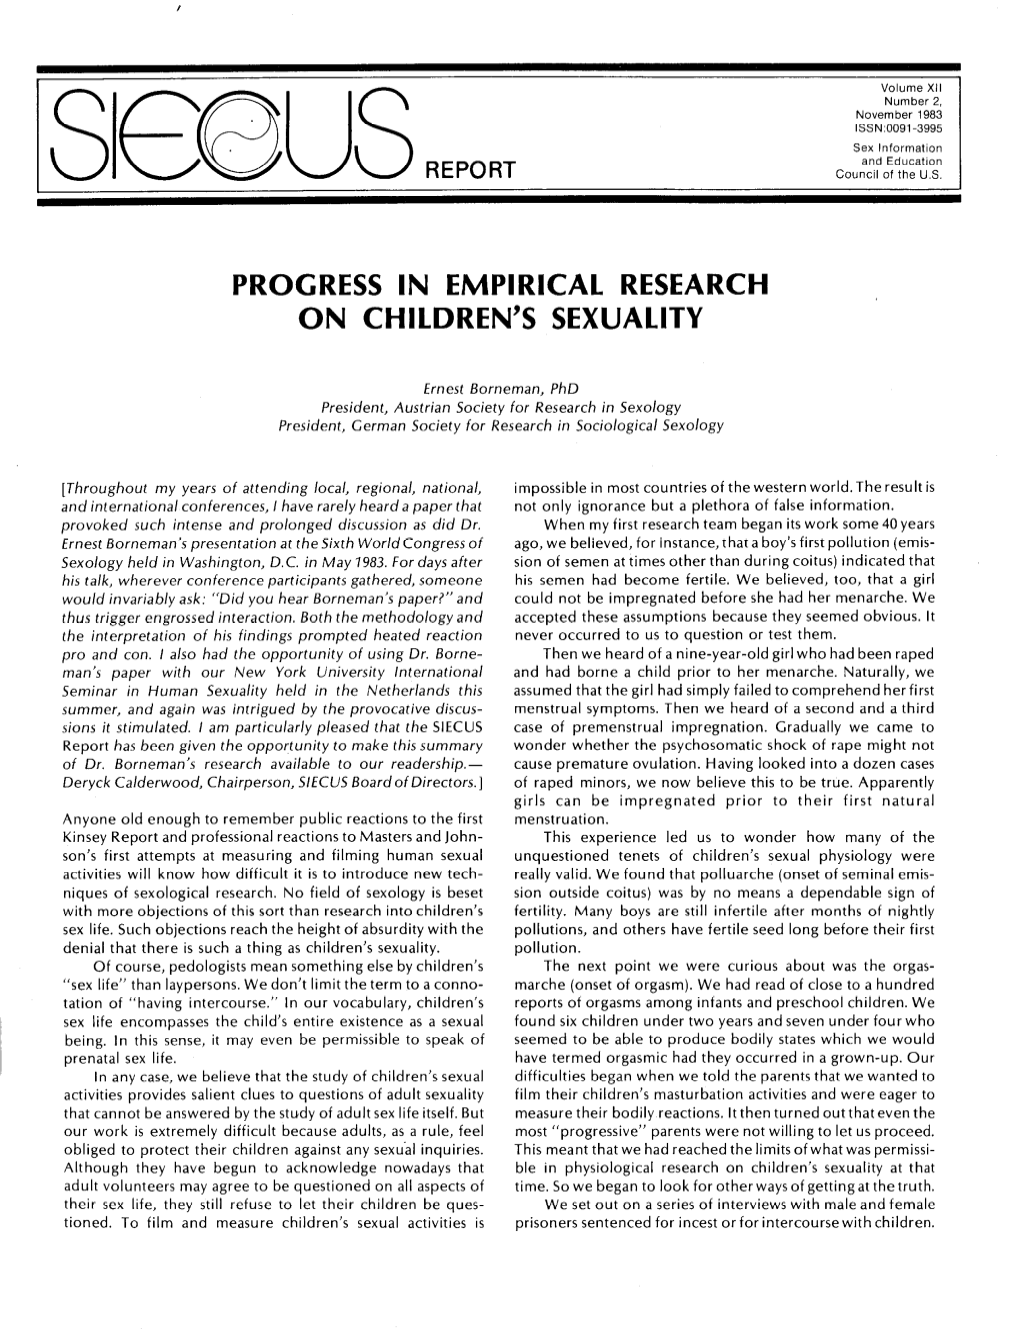 Progress in Empirical Research on Children's